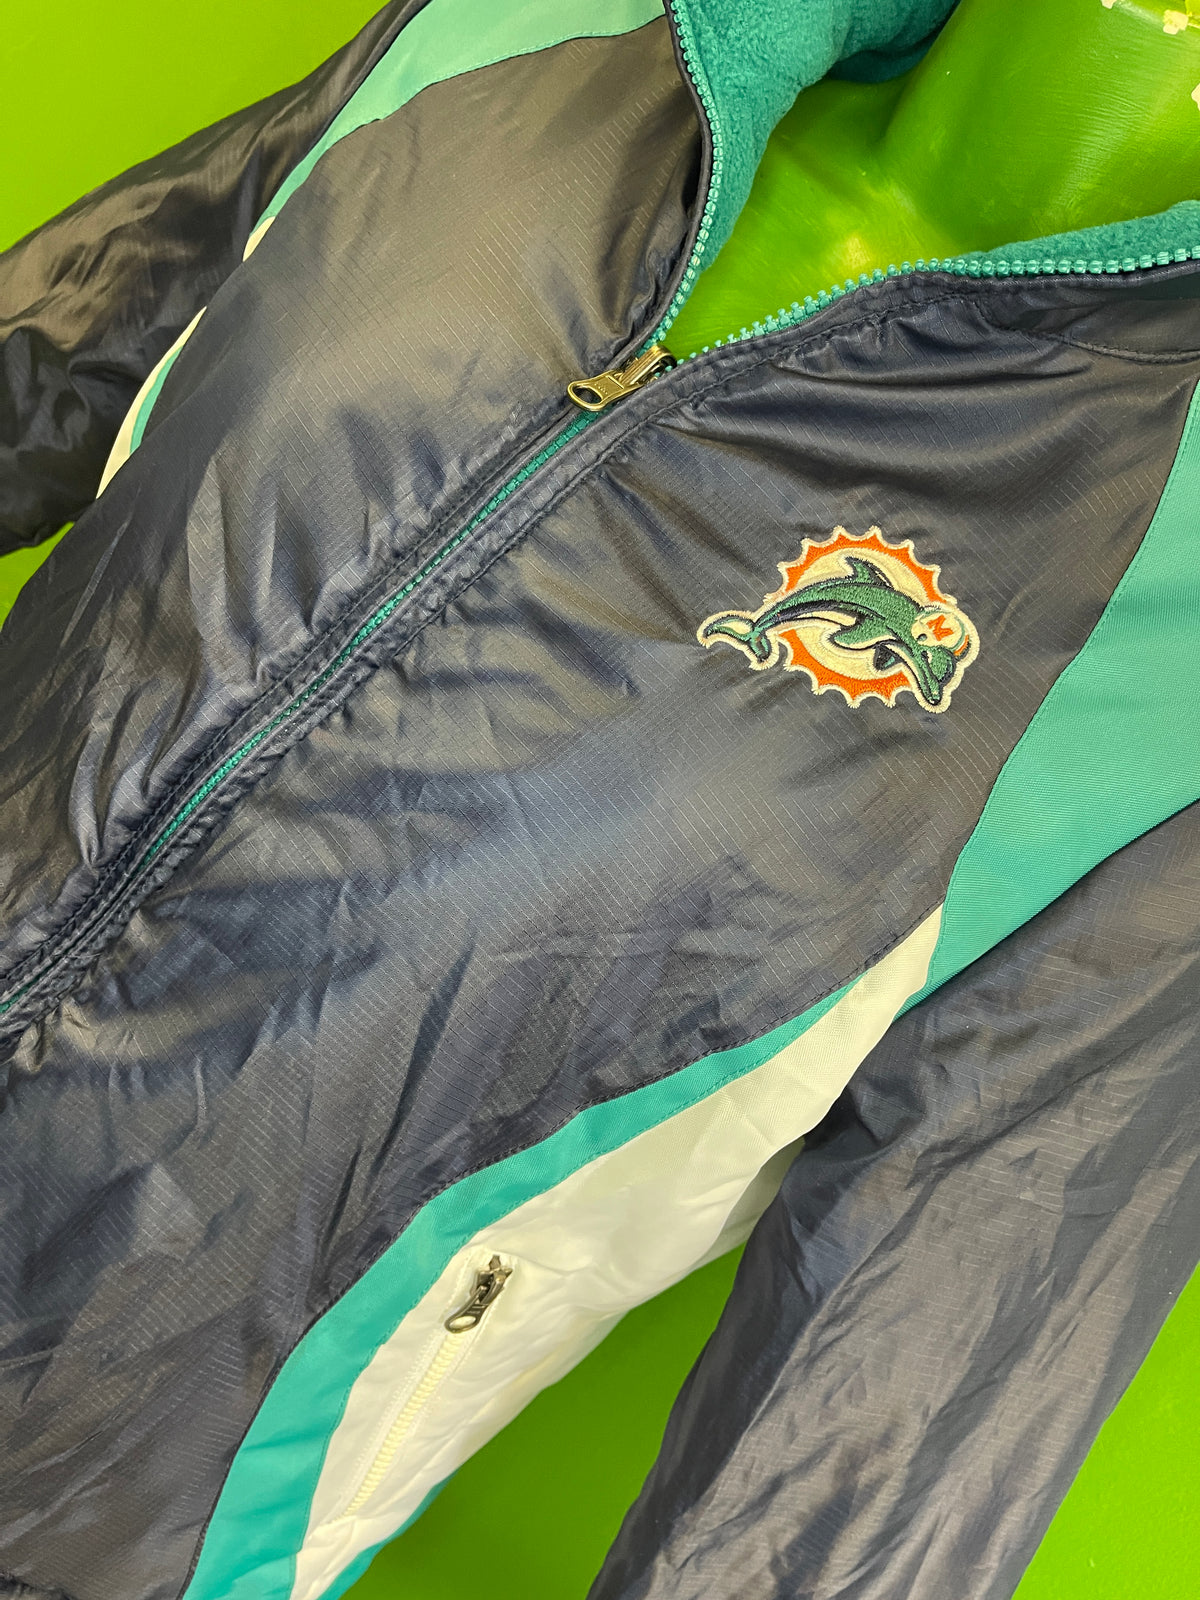 NFL Miami Dolphins GIII Reversible Water Resistant/Fleece Coat Women's Small